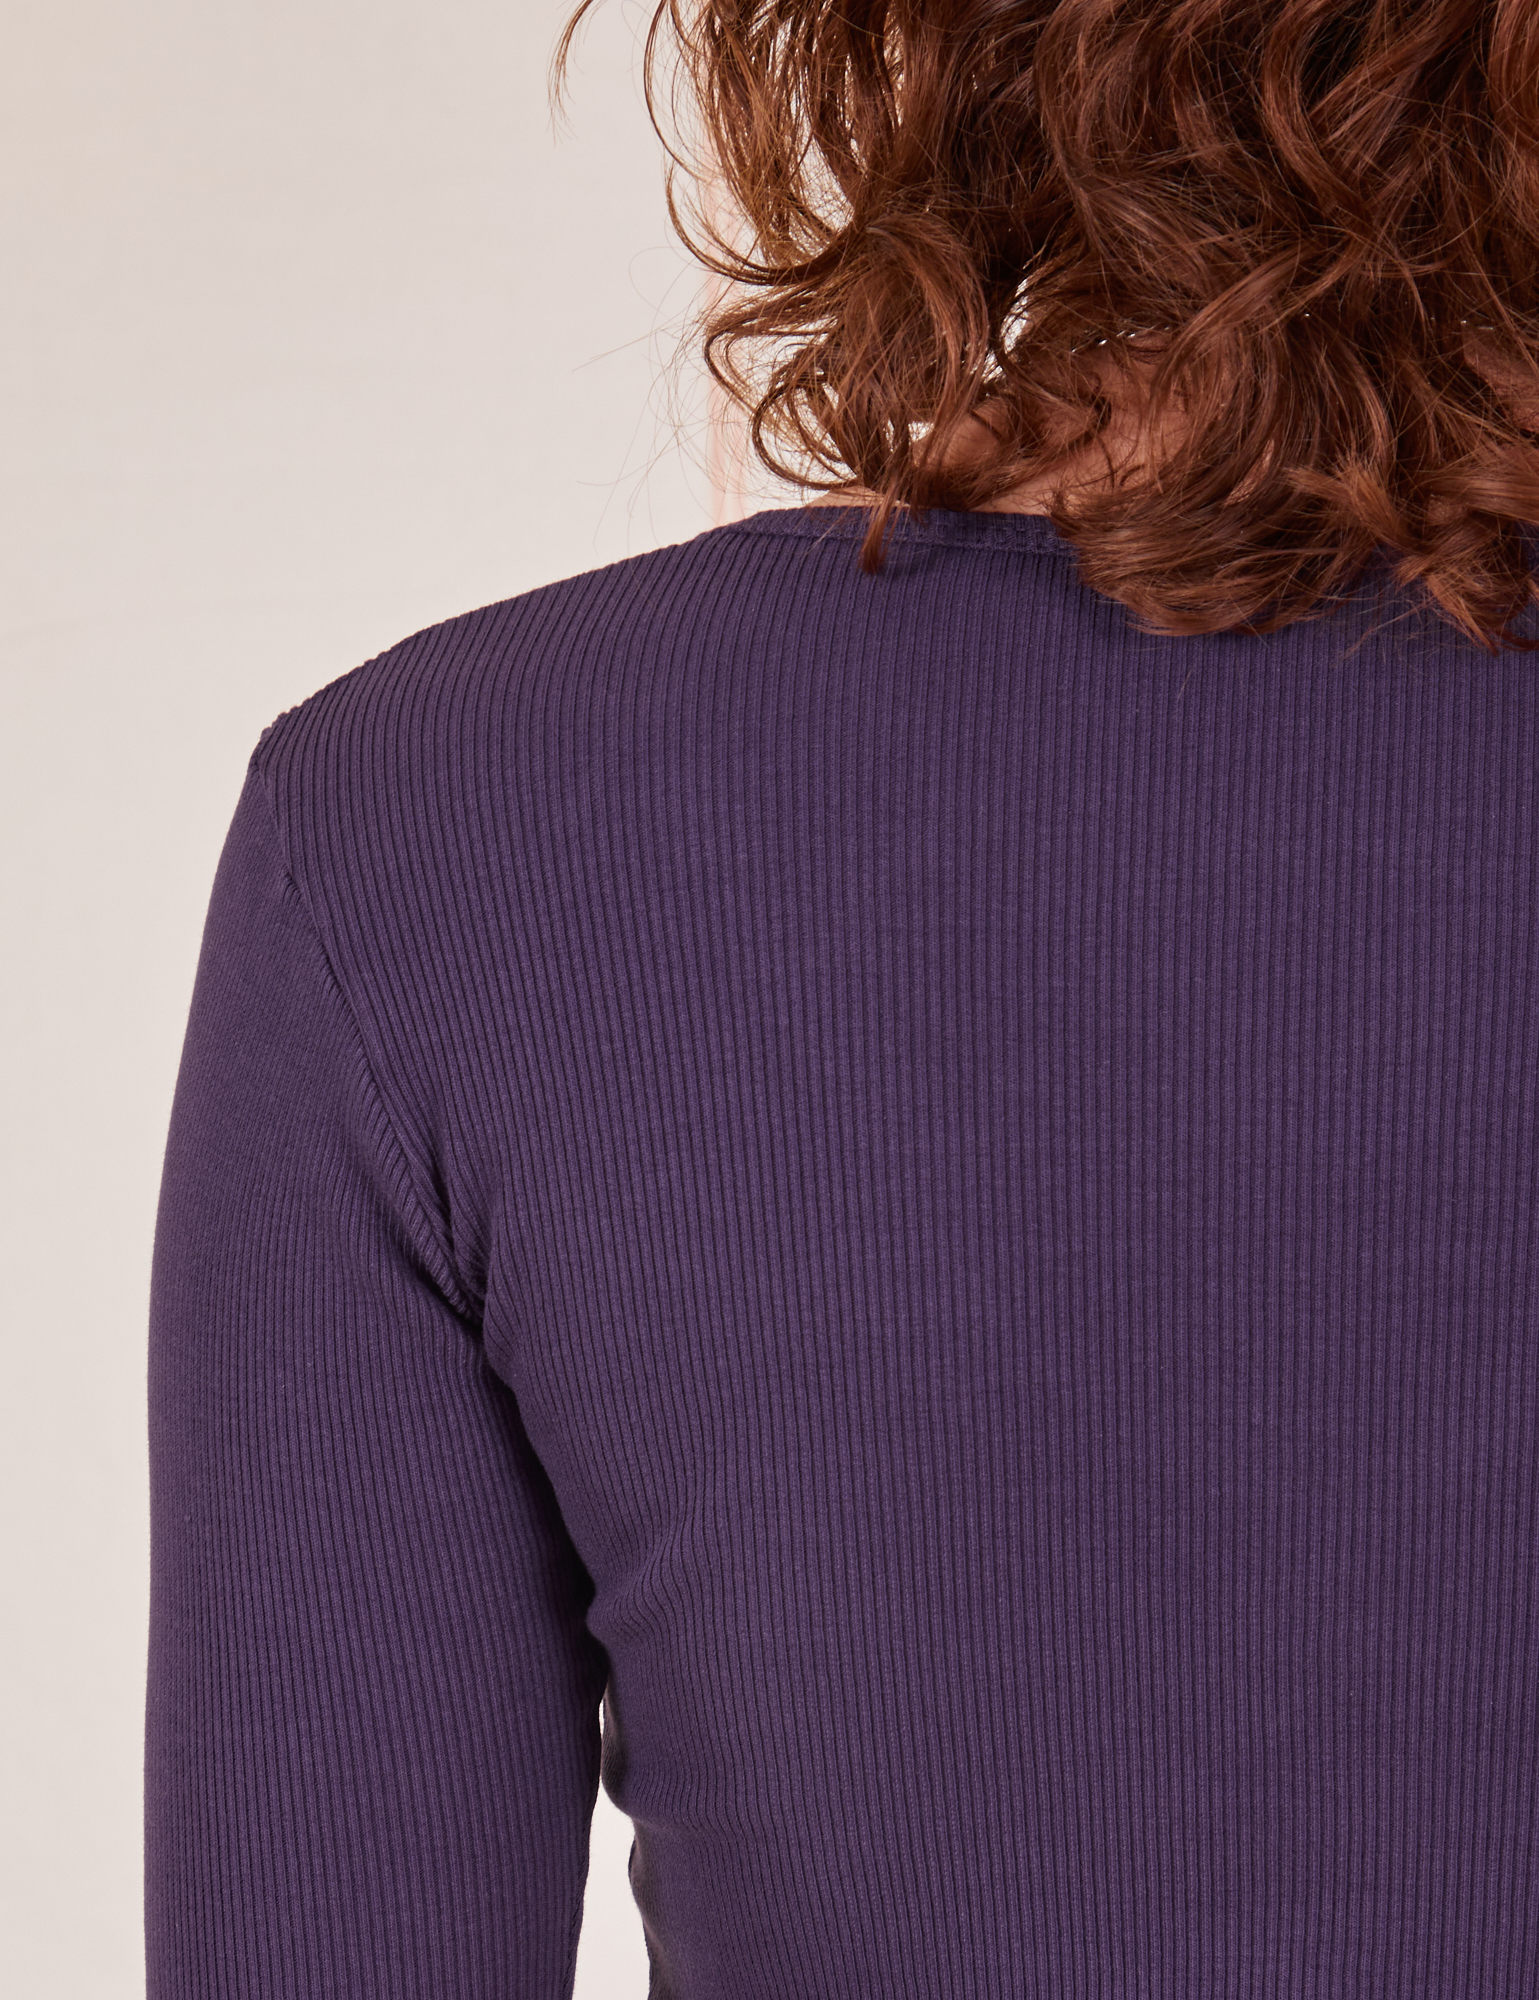 Back shoulder close up of Long Sleeve V-Neck Tee in Nebula Purple worn by Alex